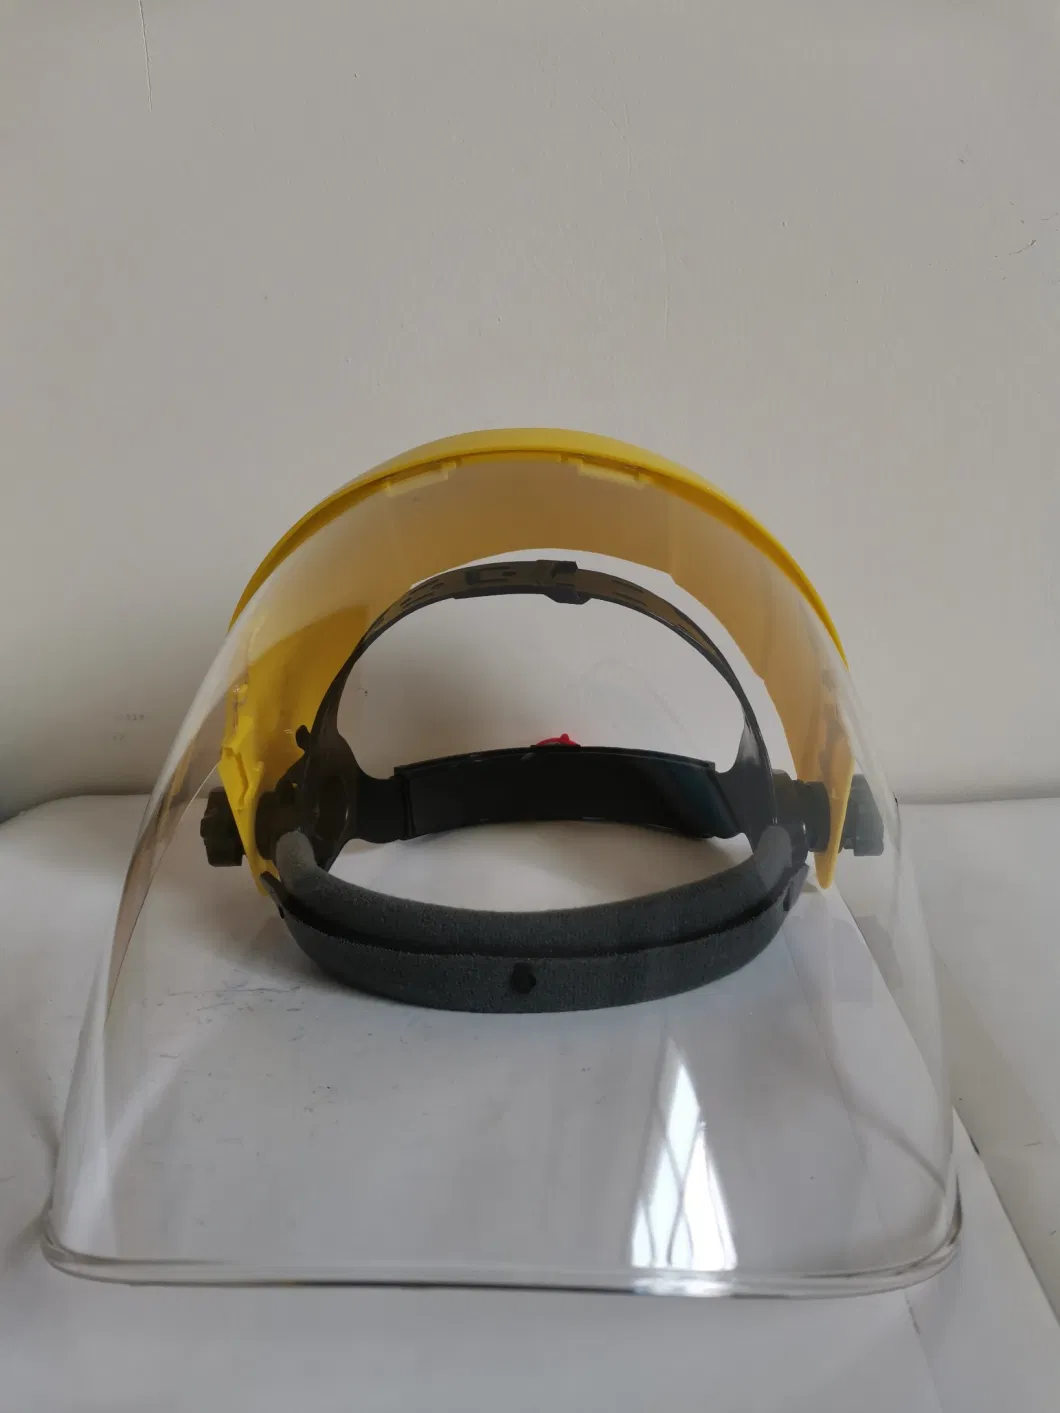 Framed PC Shield Adjustable Belt Worker Working Clear Splash Proof Welding Mask Faceshield